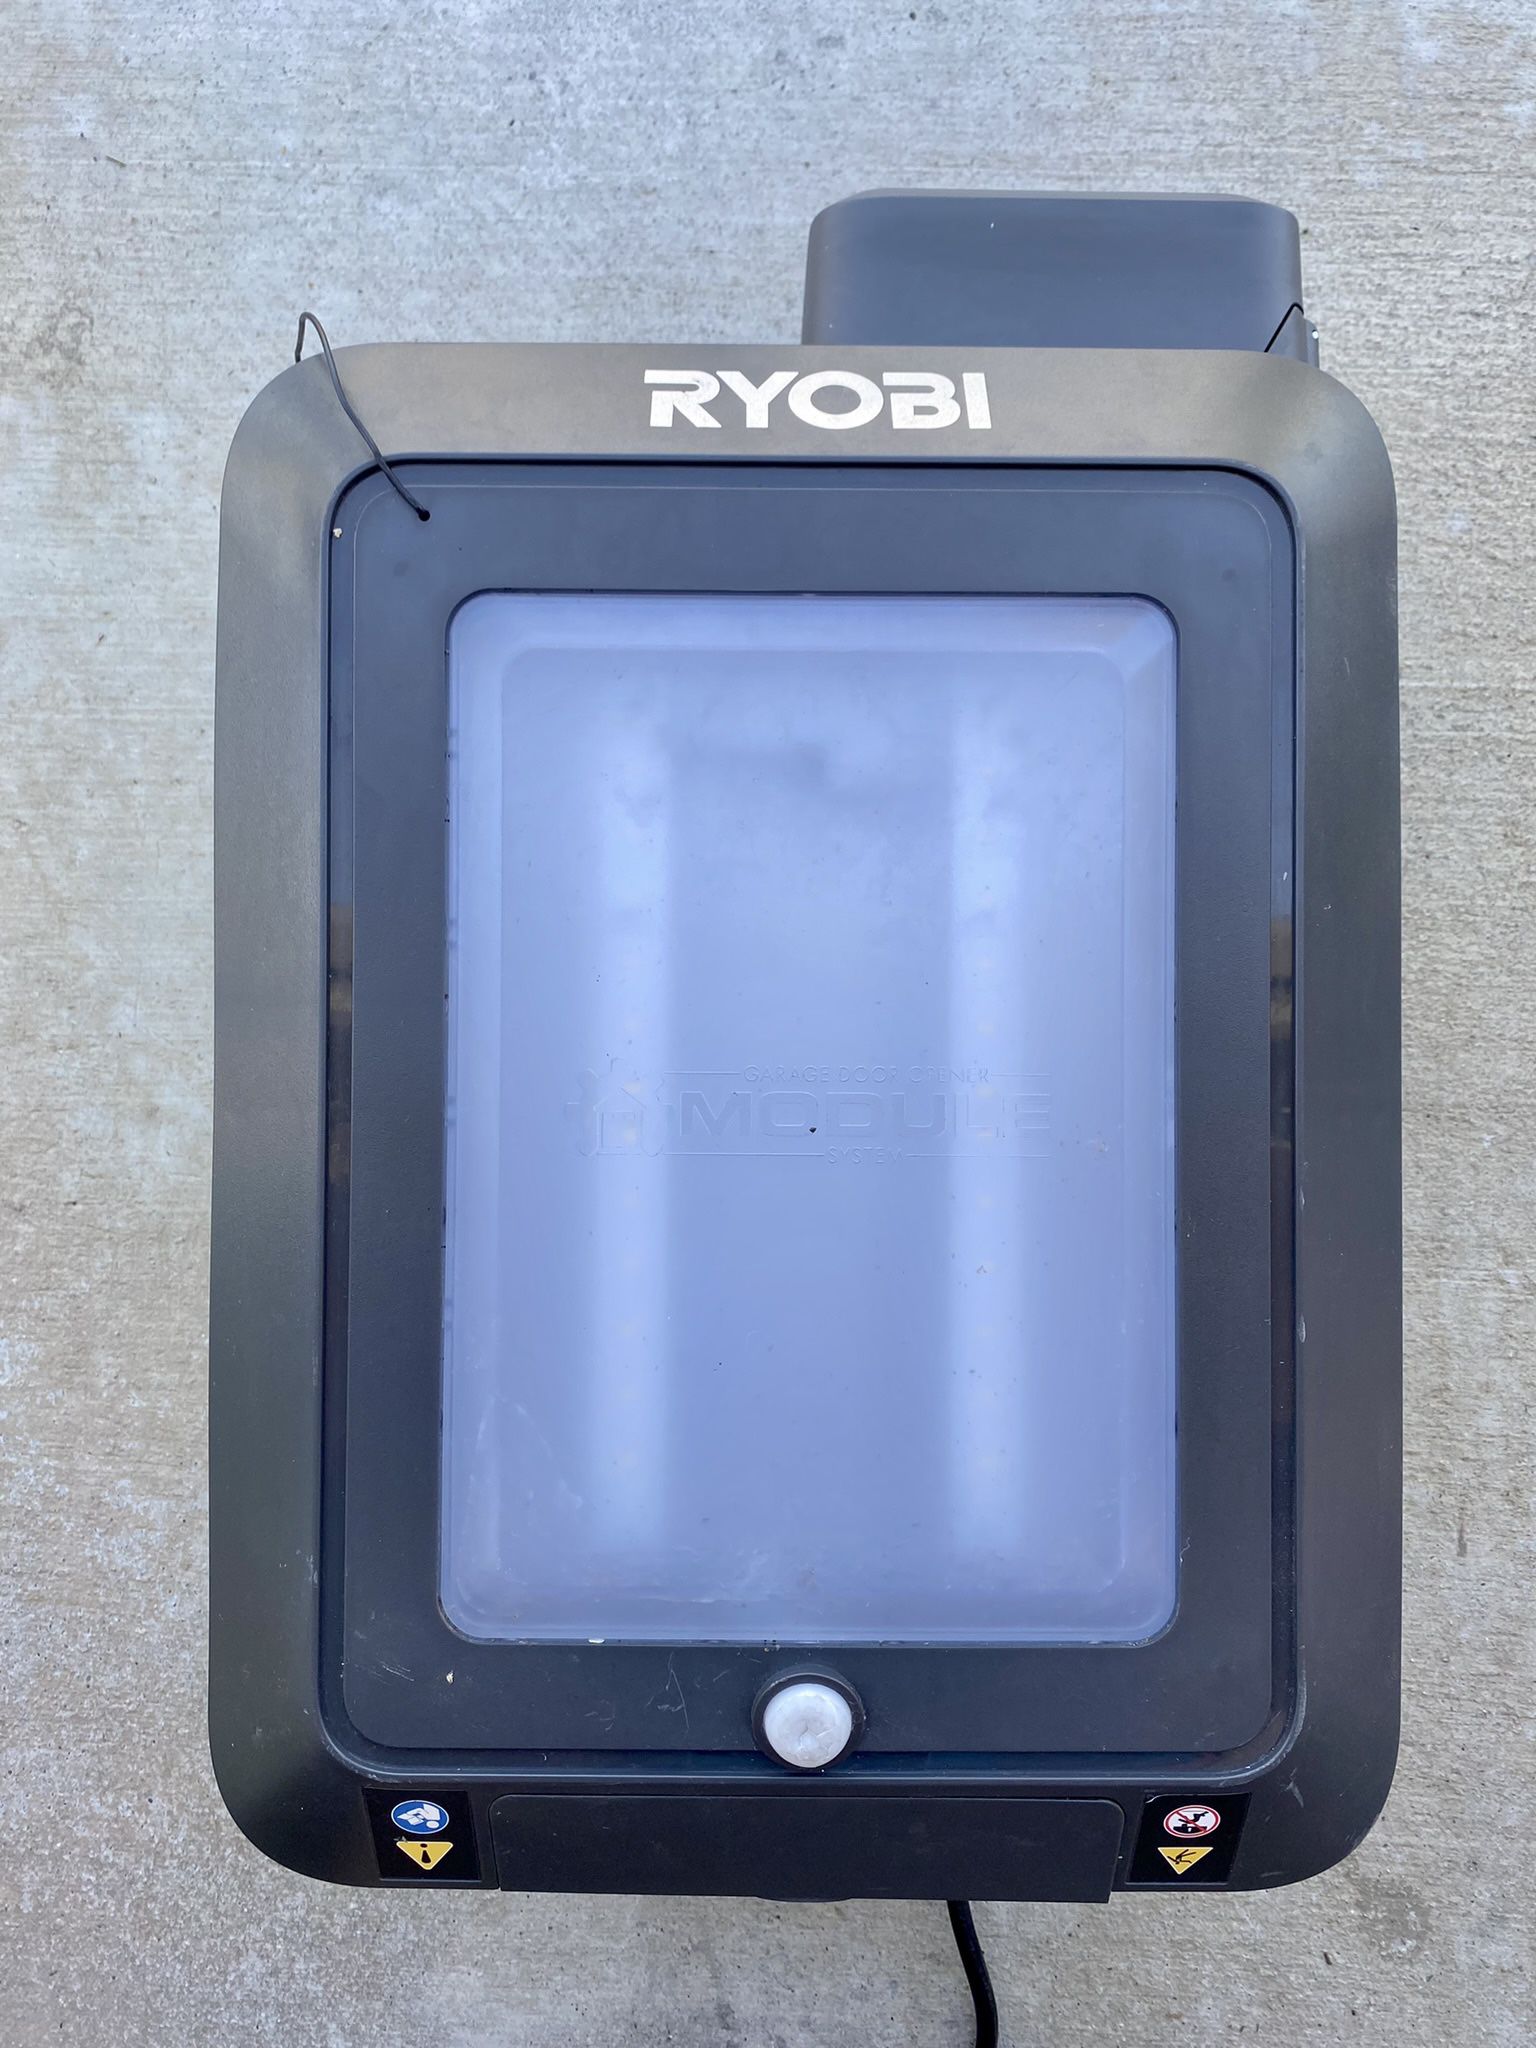 RYOBI Garage Door Track Motor Opener Remote Keypad Clicker with Battery Backup